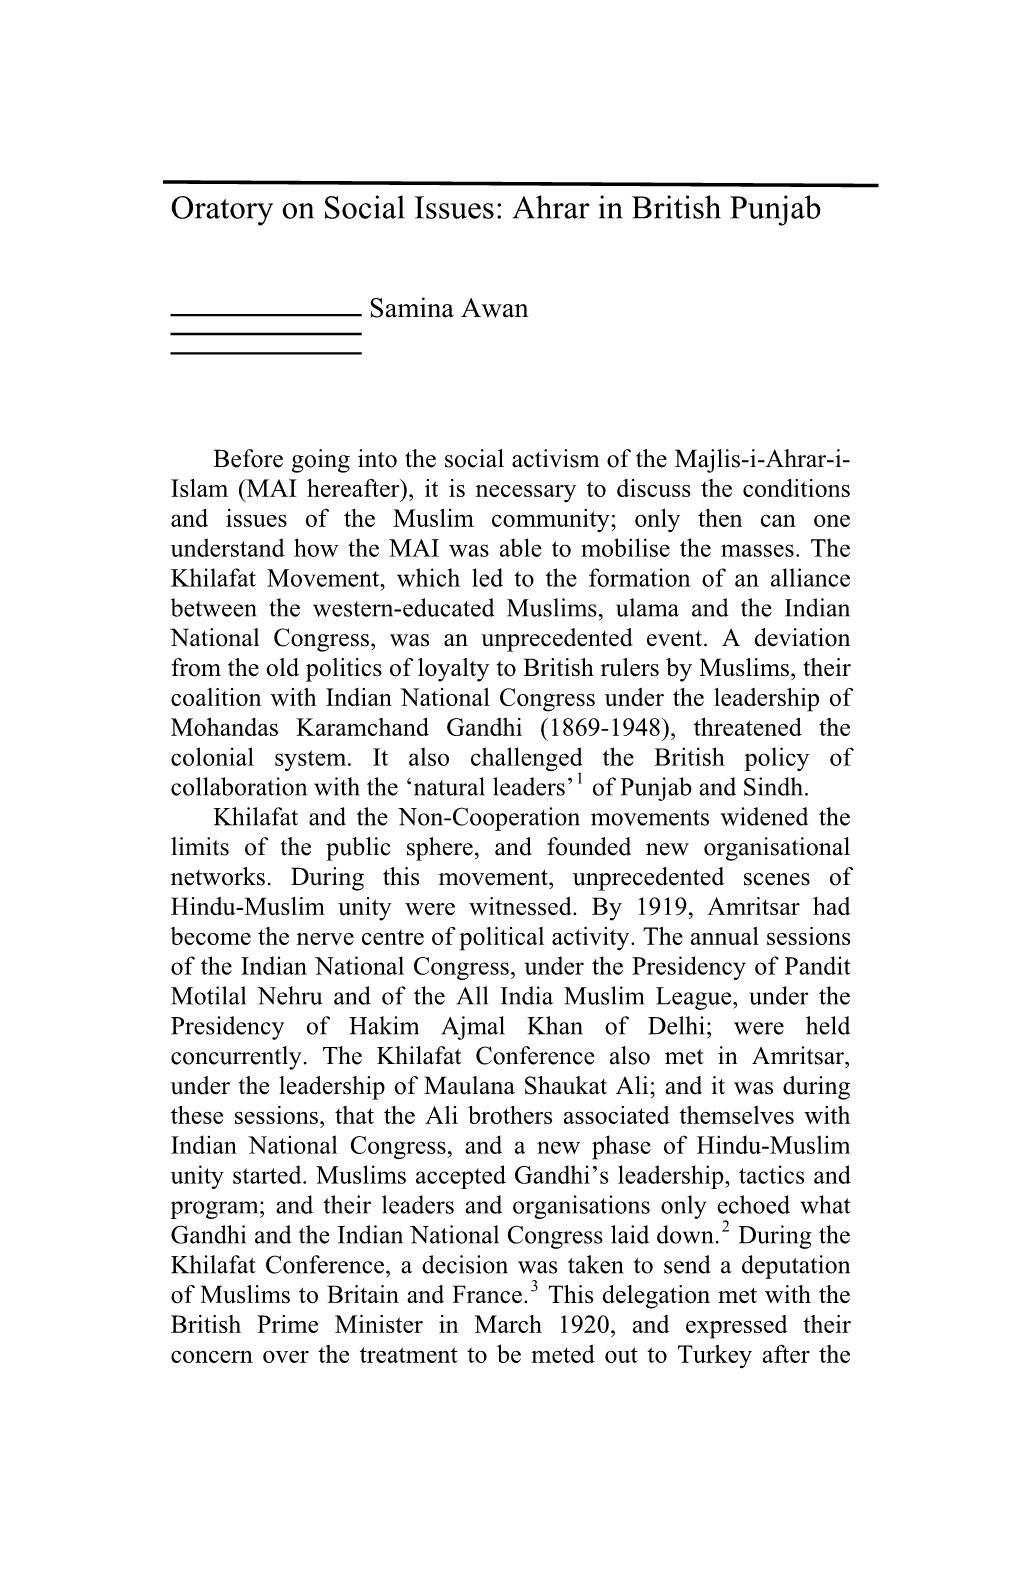 Oratory on Social Issues: Ahrar in British Punjab by Samina Awan